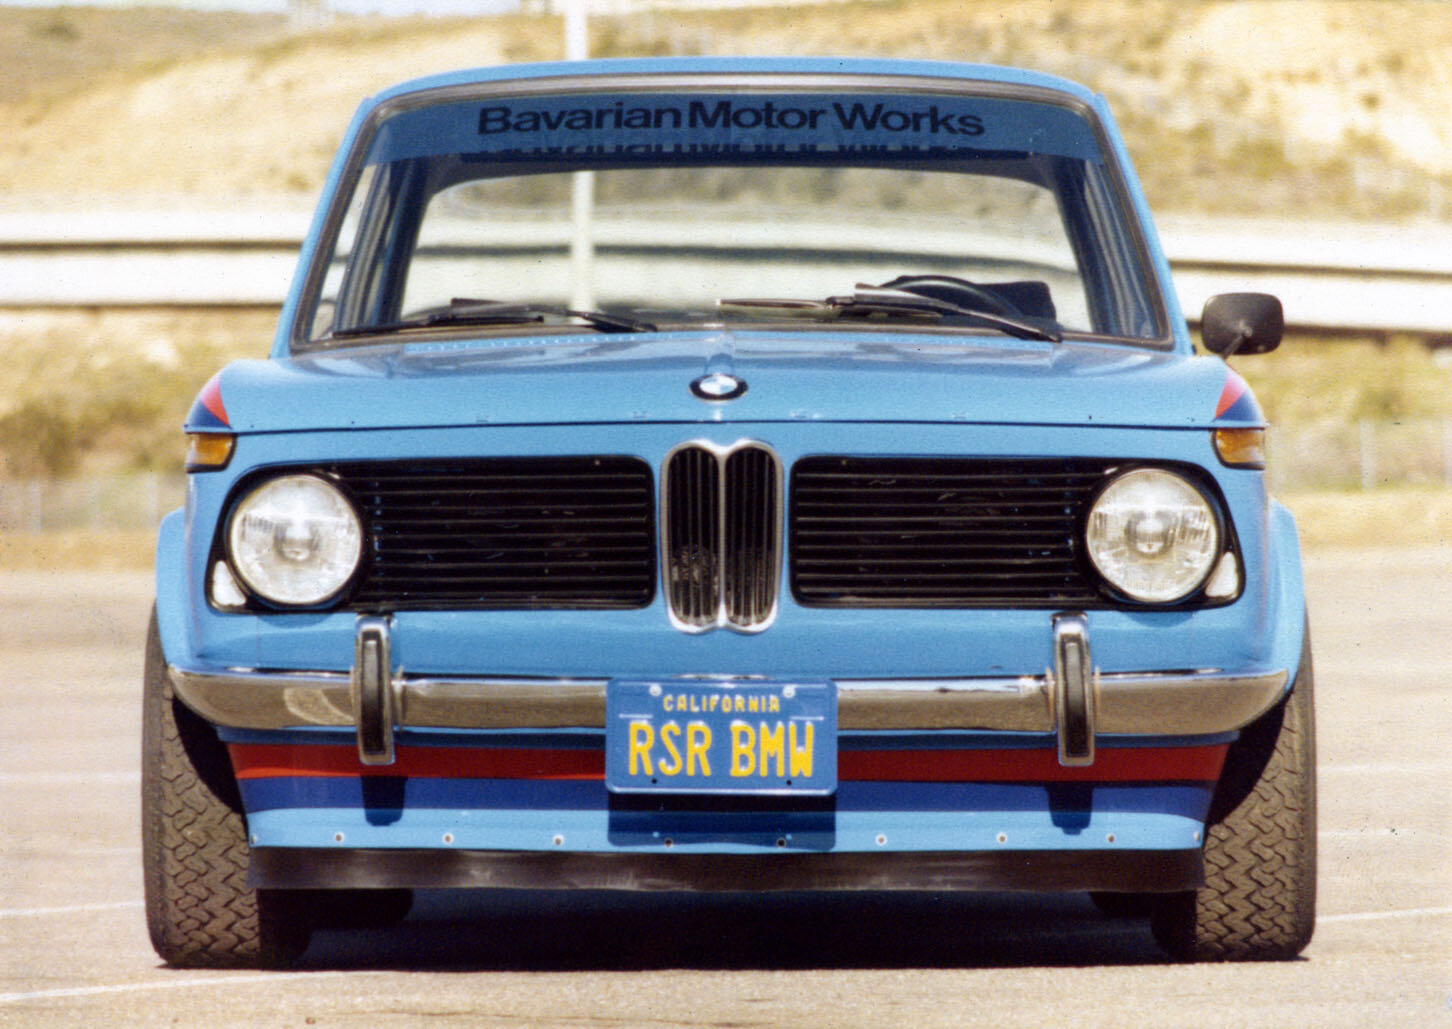 RSR BMW front.jpg